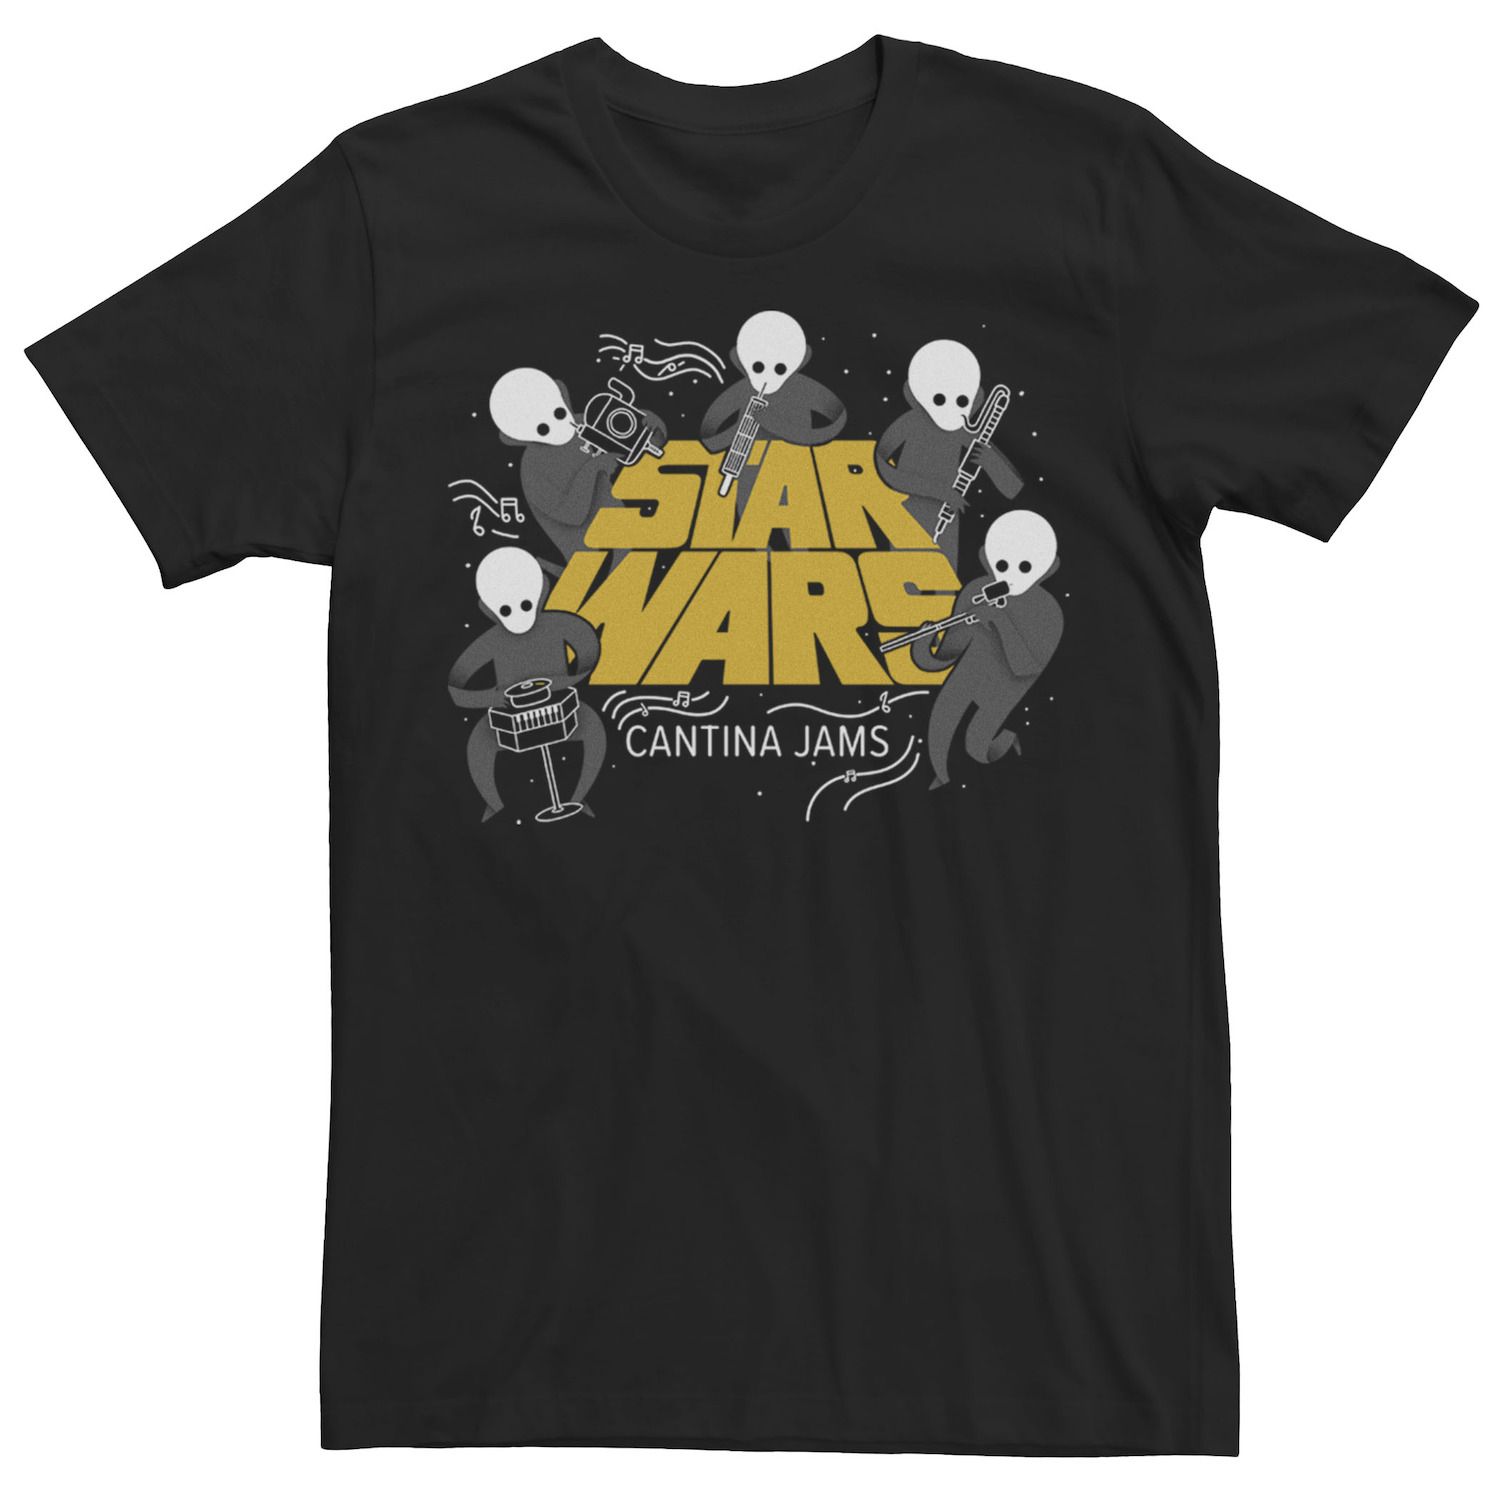 Мужская футболка с логотипом Cantina Jams и графическим рисунком Star Wars